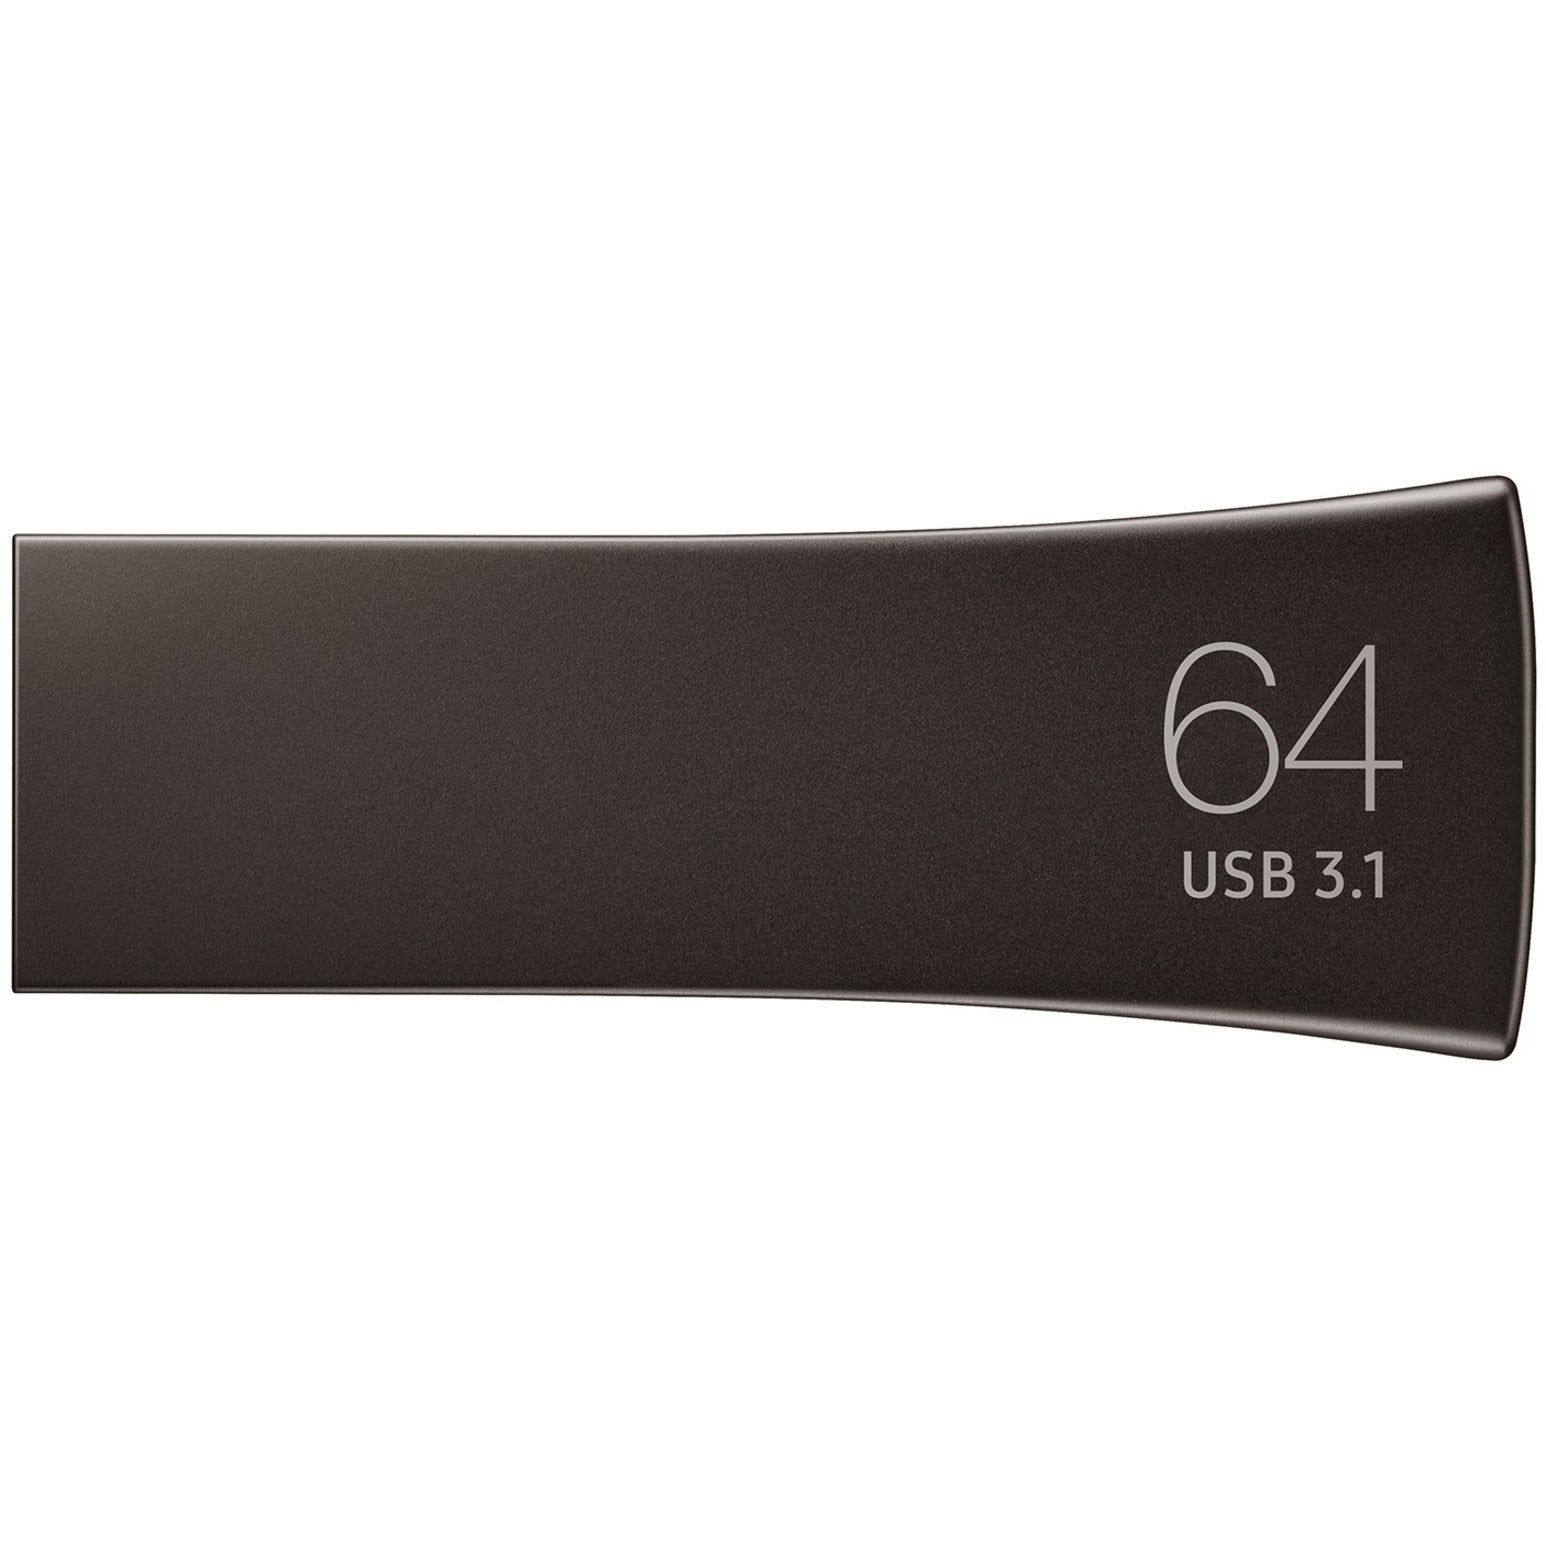 Samsung MUF-64BE4/AM BAR Plus USB 3.1 Flash Drive 64GB Titan Grey, High-Speed Data Transfer and Durable Design